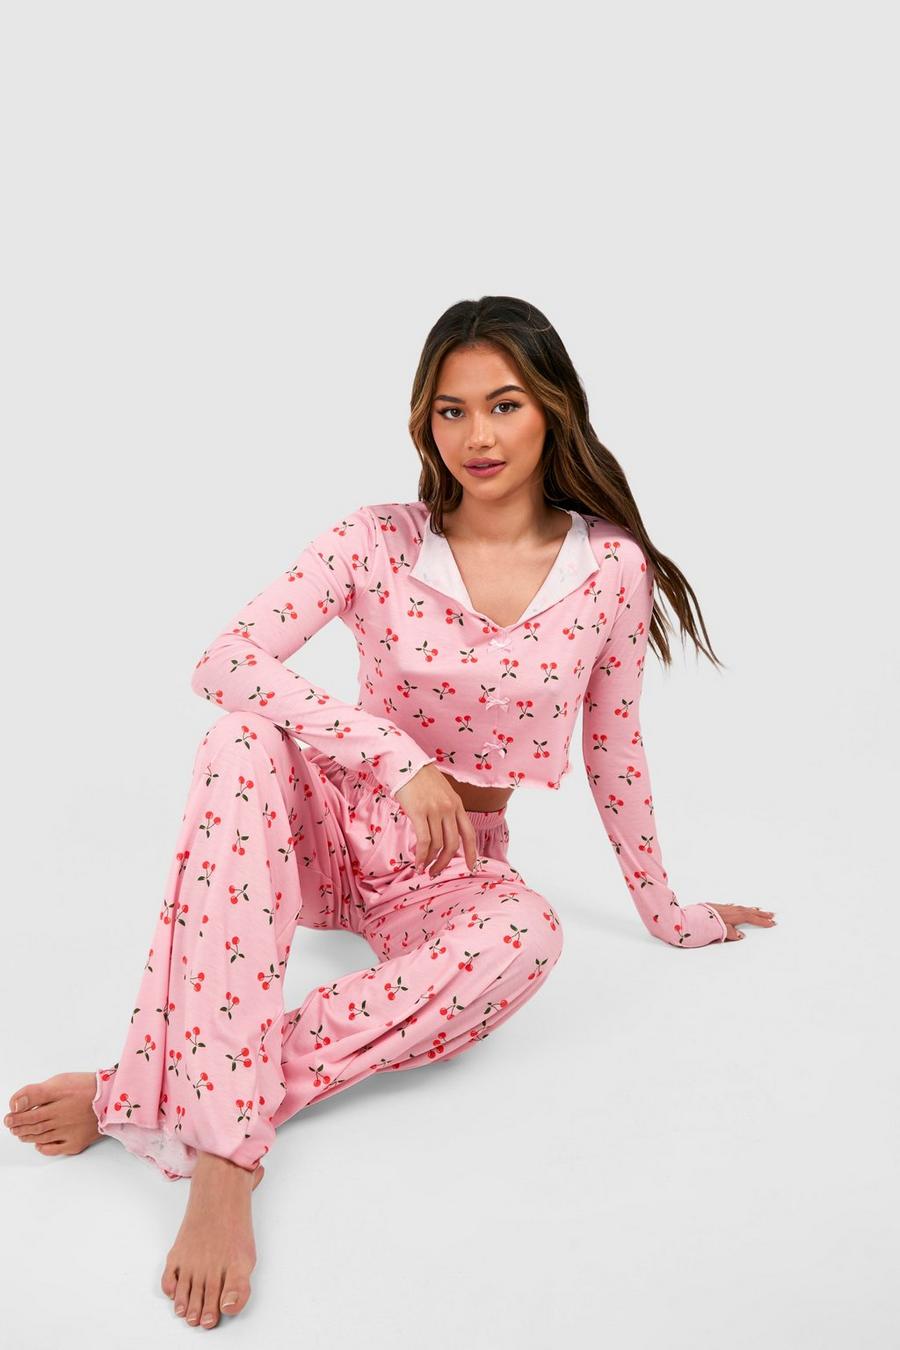  STJDM Nightgown,Women's Pajamas Set Luxury Style Fashion Skull  Print Sleepwear Silk Like Nightie Leisure Home Clothes Nightwear Set L Pink  : Clothing, Shoes & Jewelry